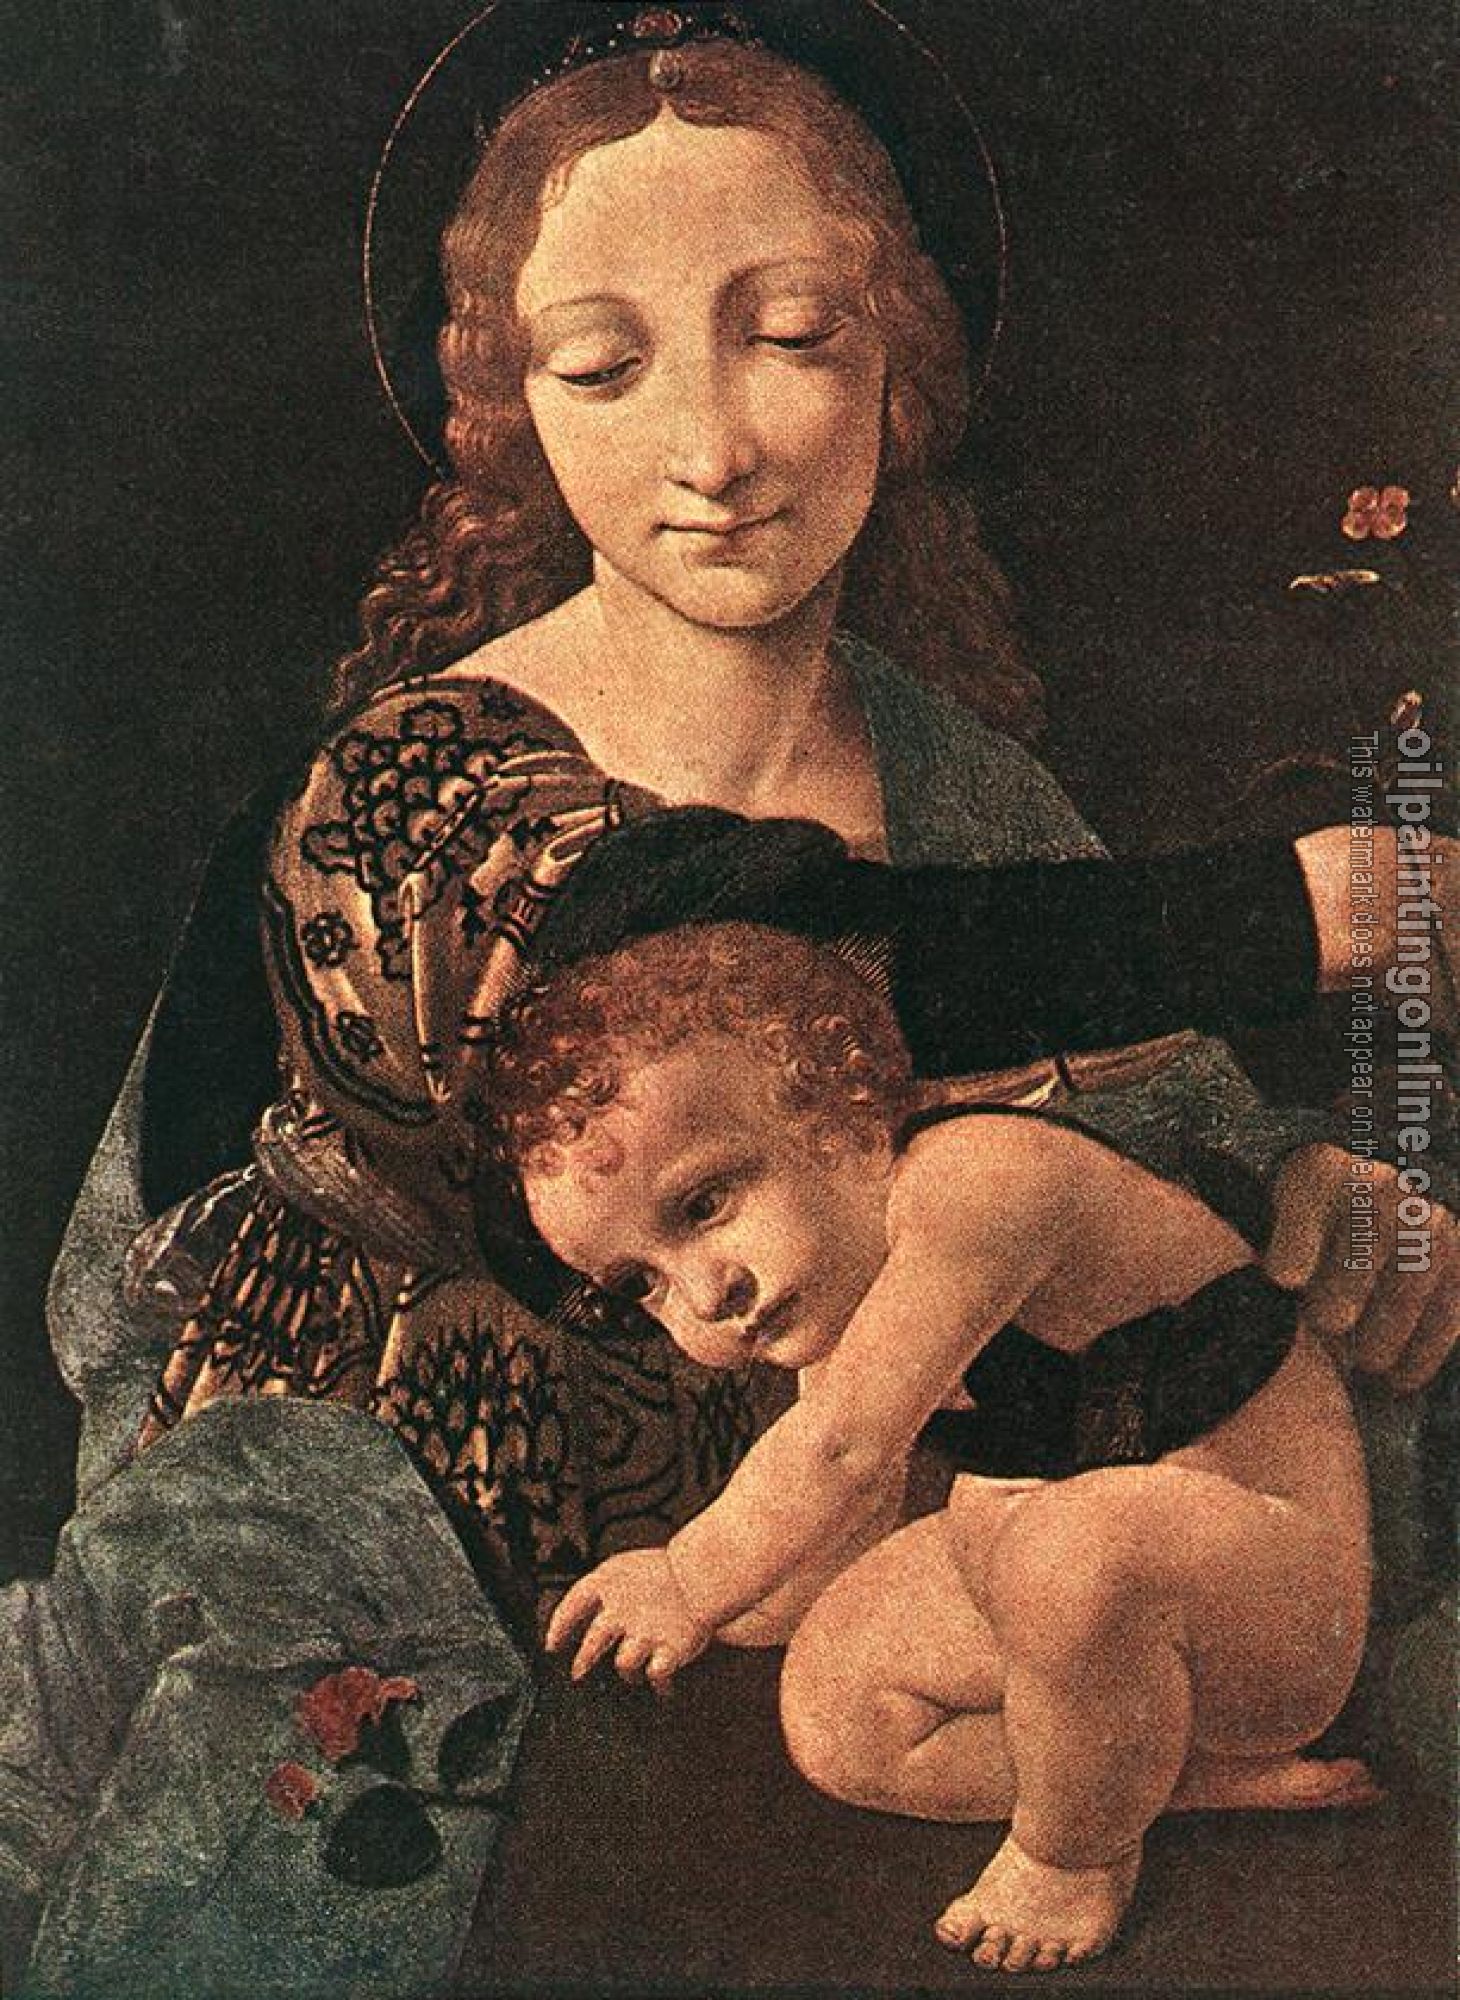 Boltraffio, Giovanni Antonio - Virgin and Child with a Flower Vase